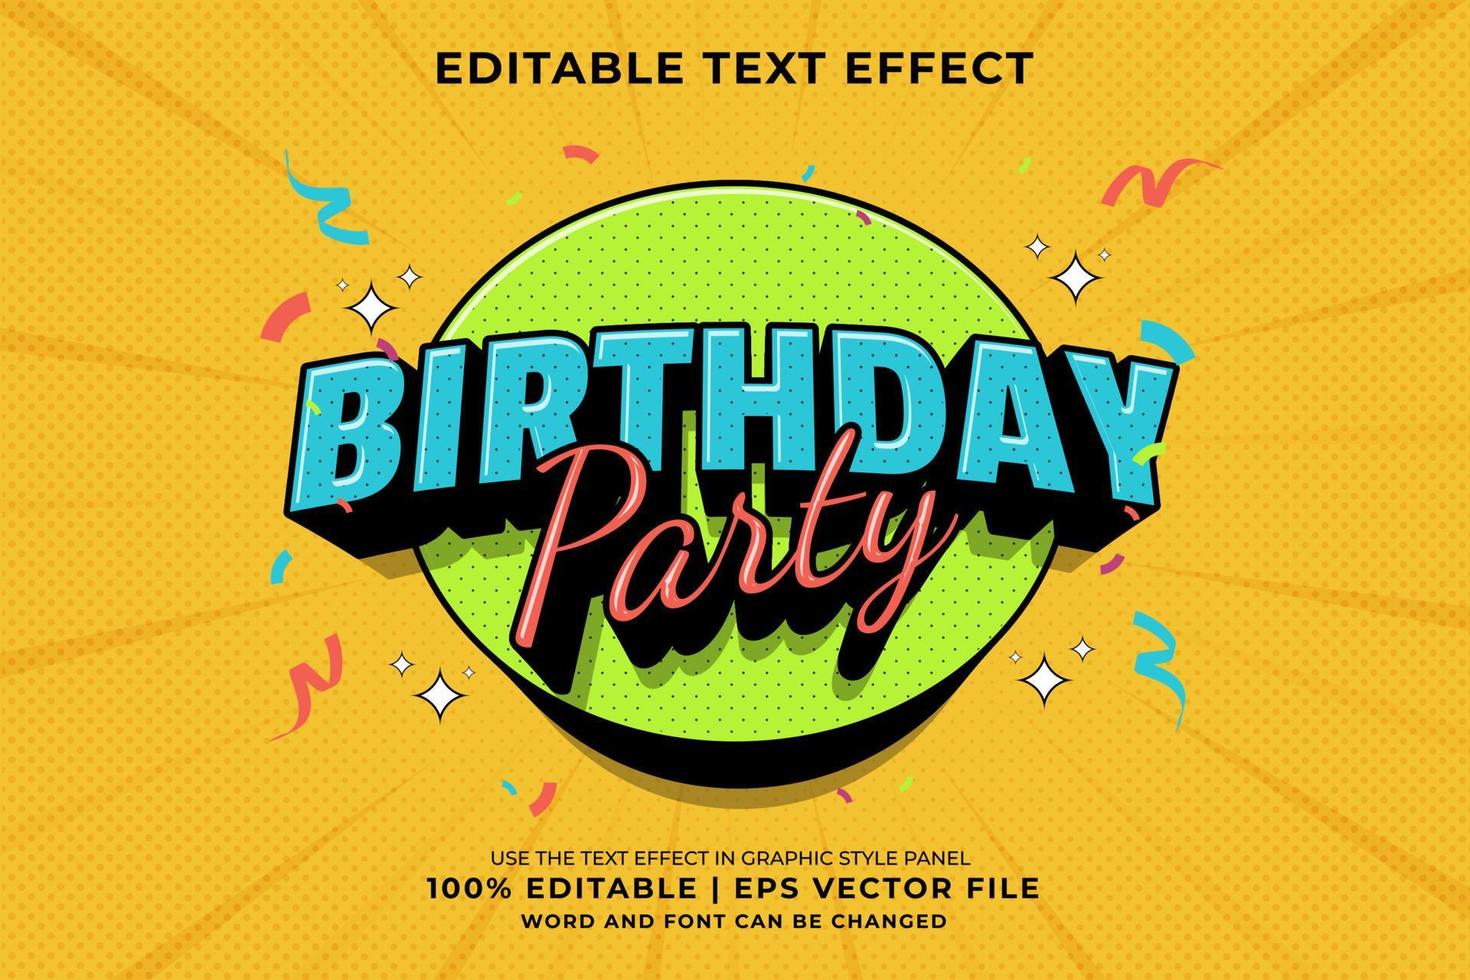 Editable text effect - Birthday Party Cartoon template style premium vector